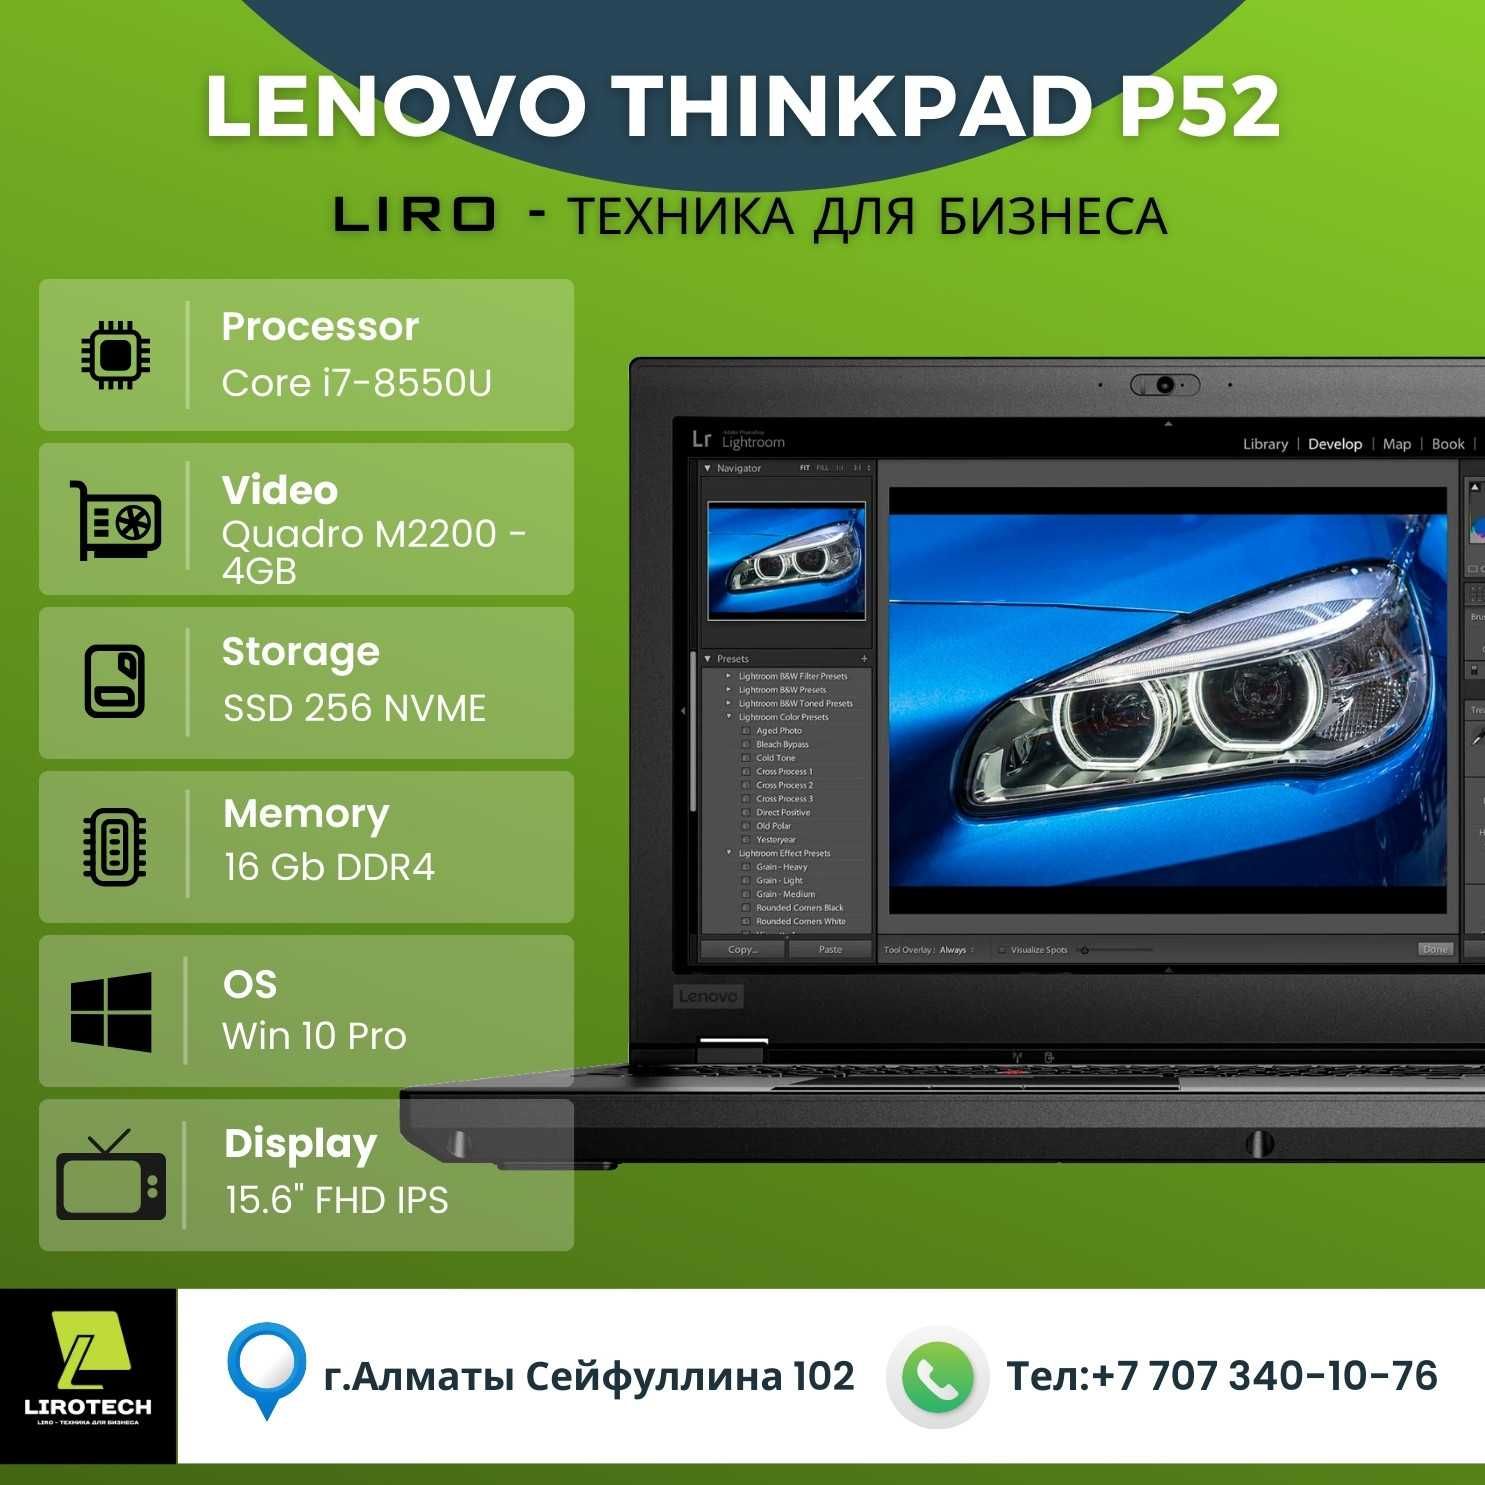 LENOVO ThinkPad P52. Core i7-8550U 1.8/4.0 GHz 4/8